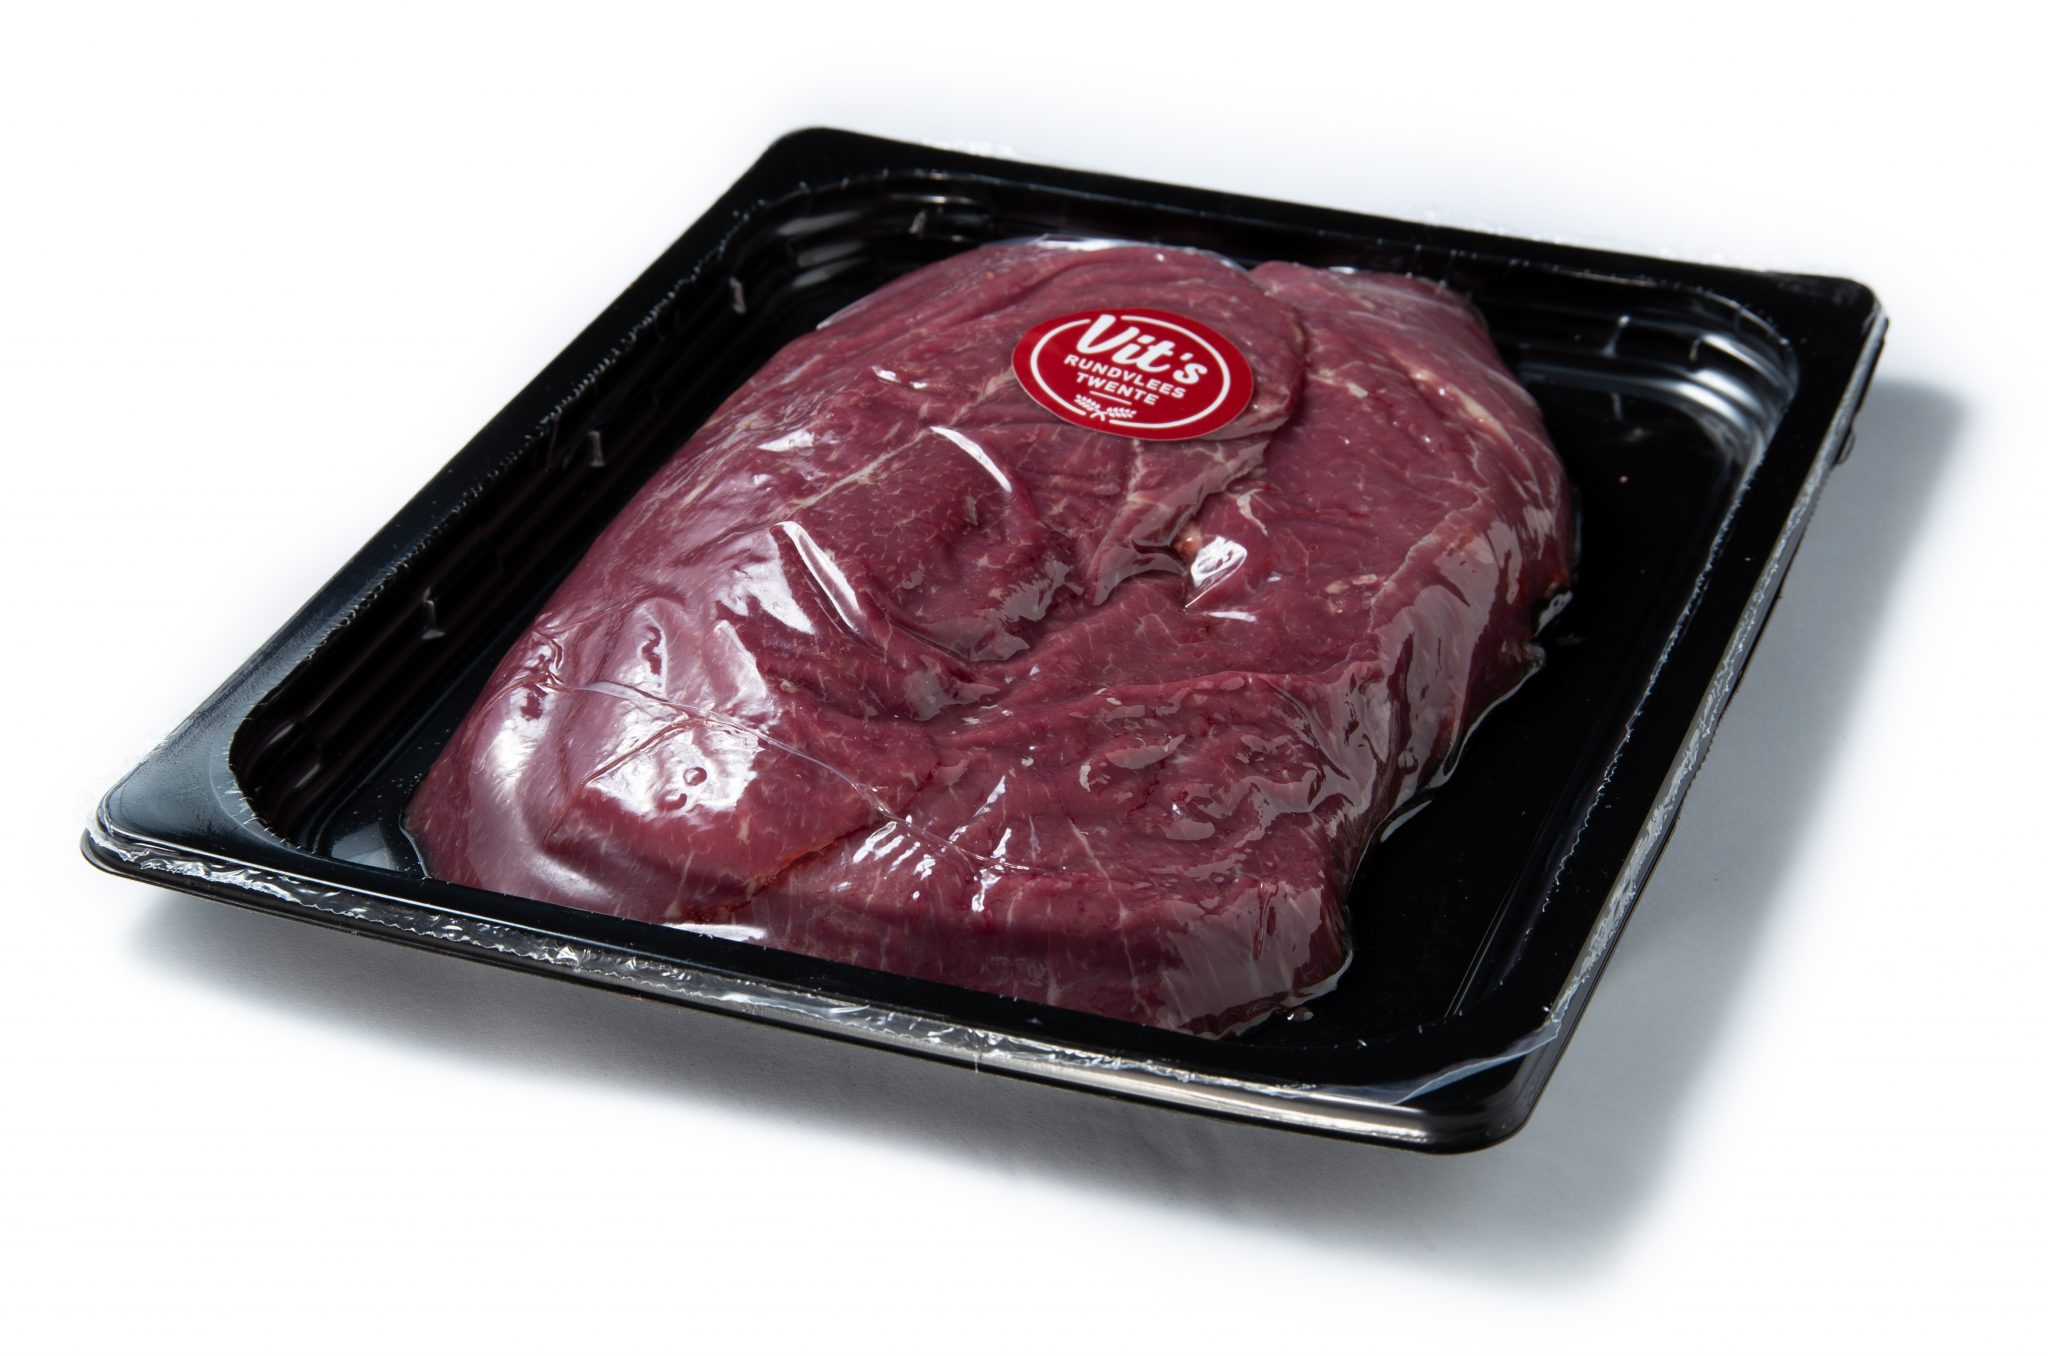 Vit's Rundvlees Twente | Flat Iron steak